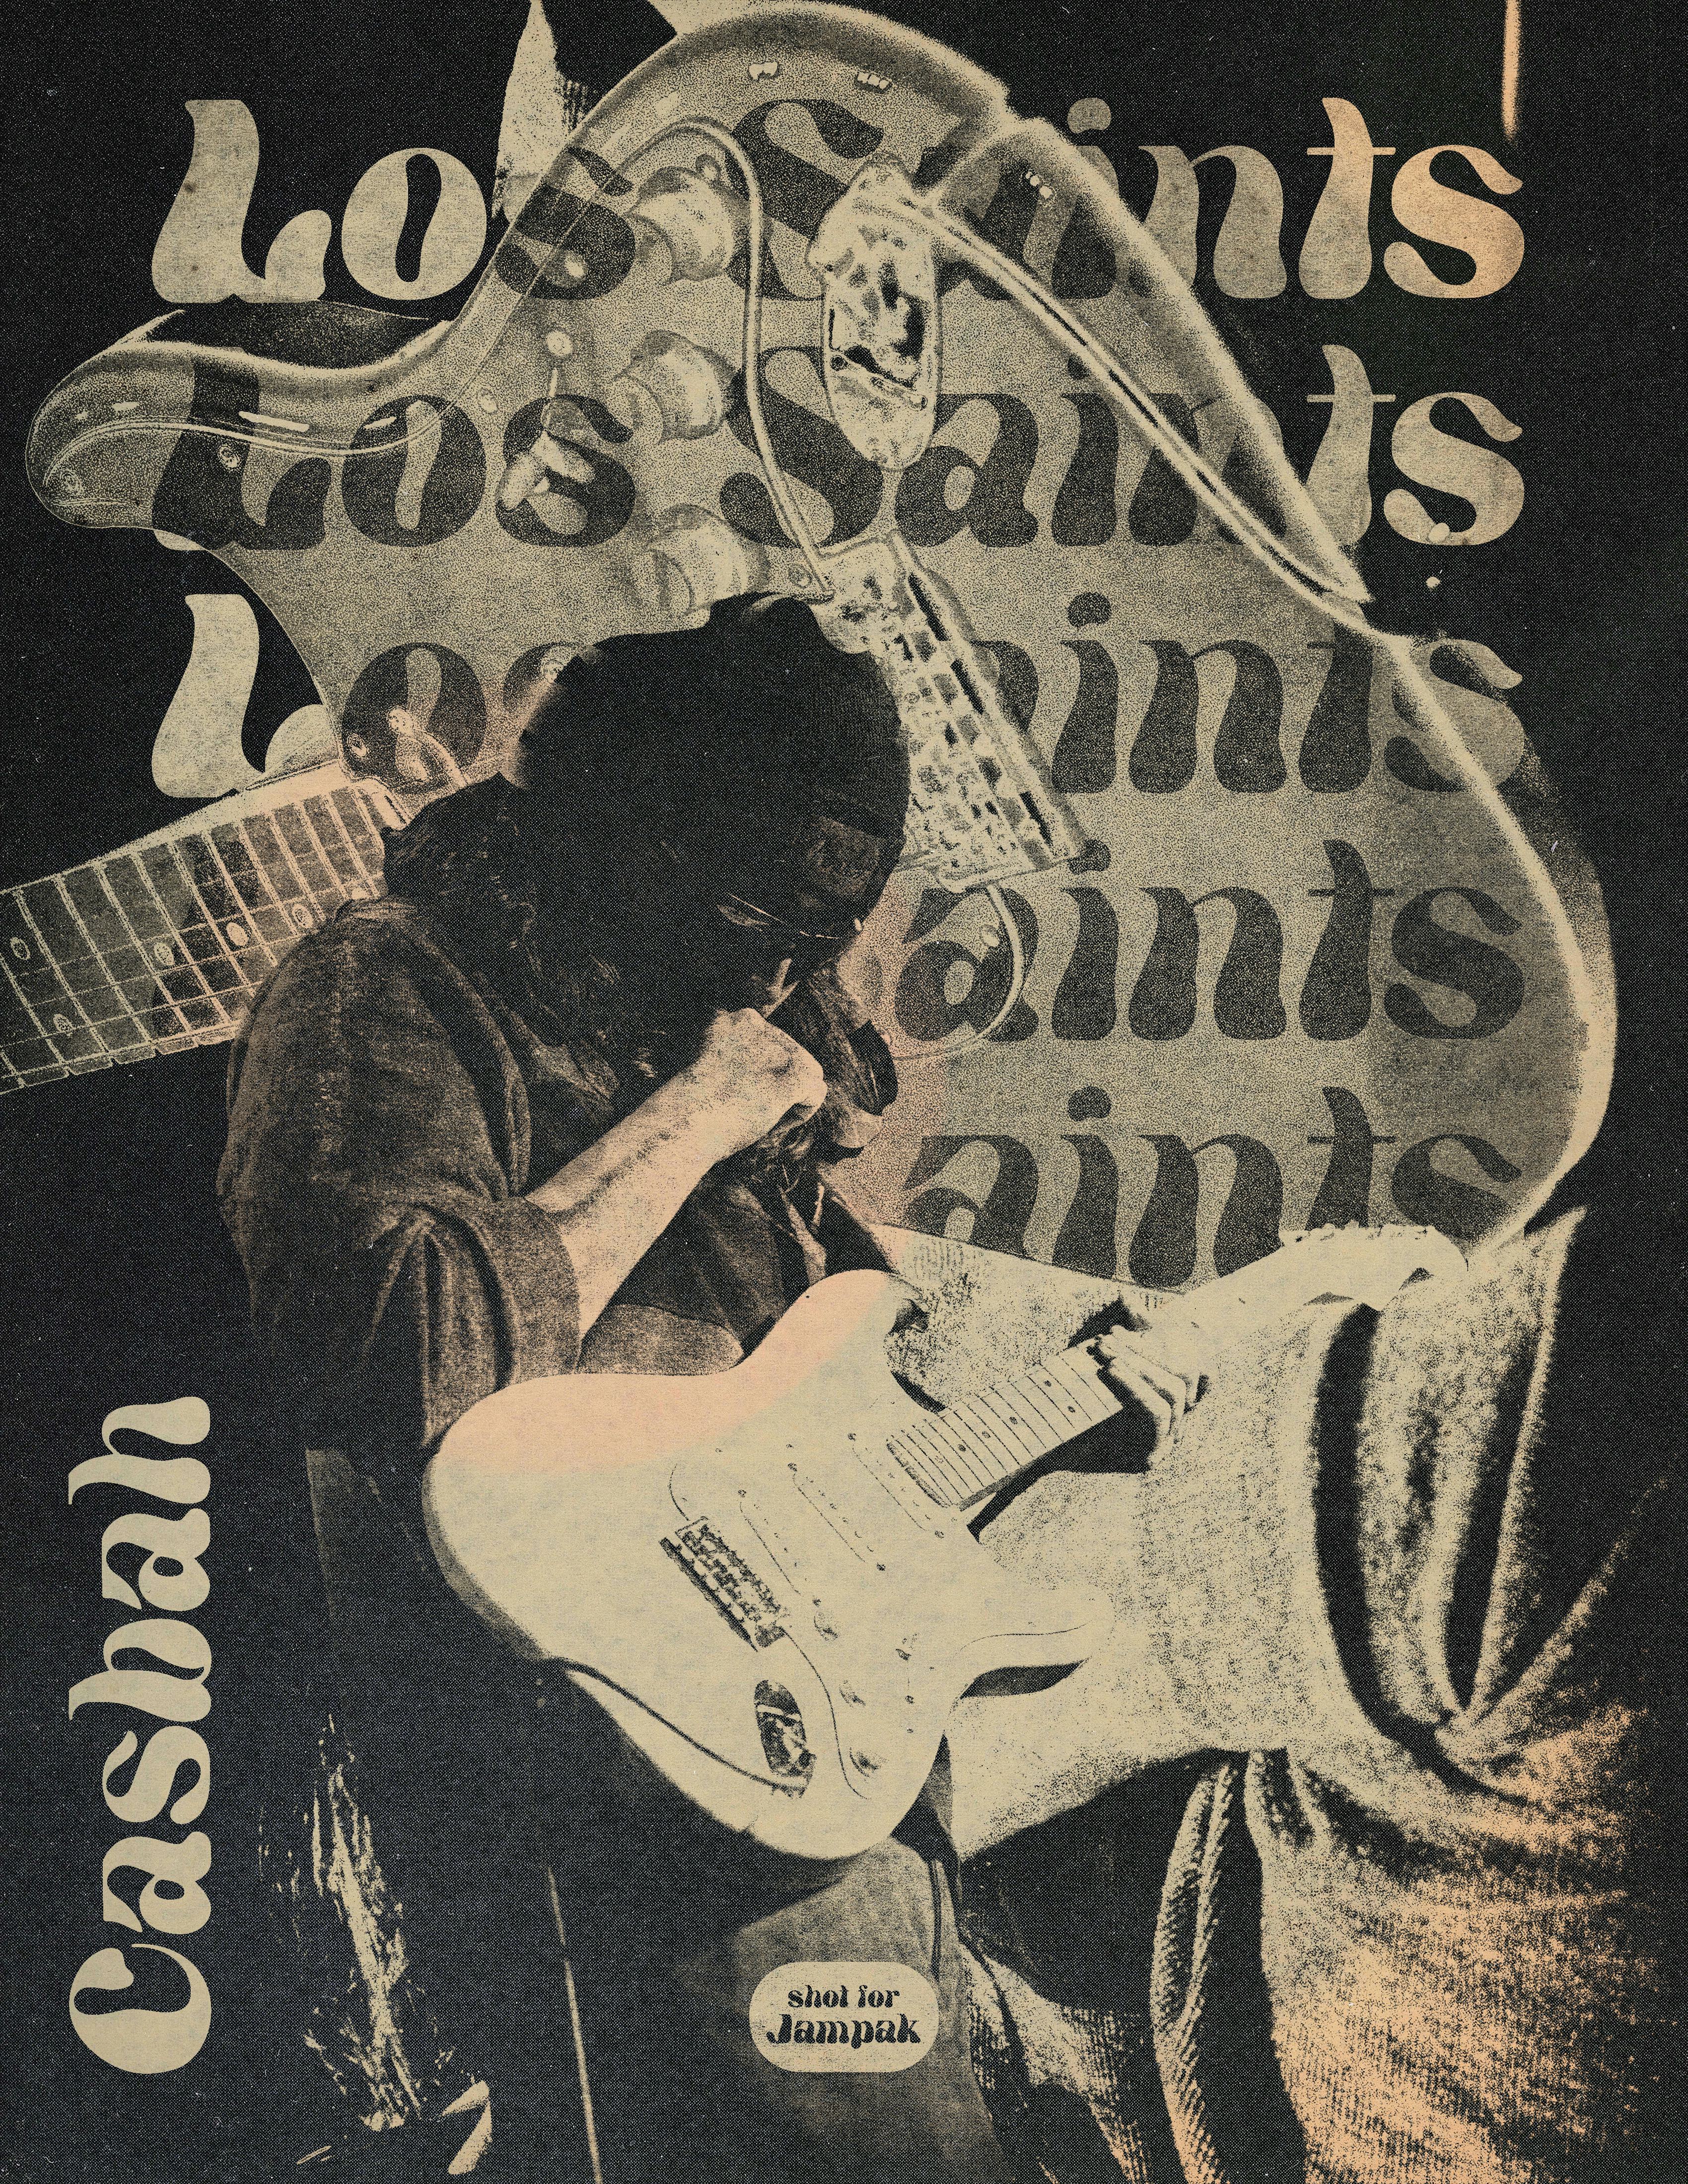 LosSaints-event poster